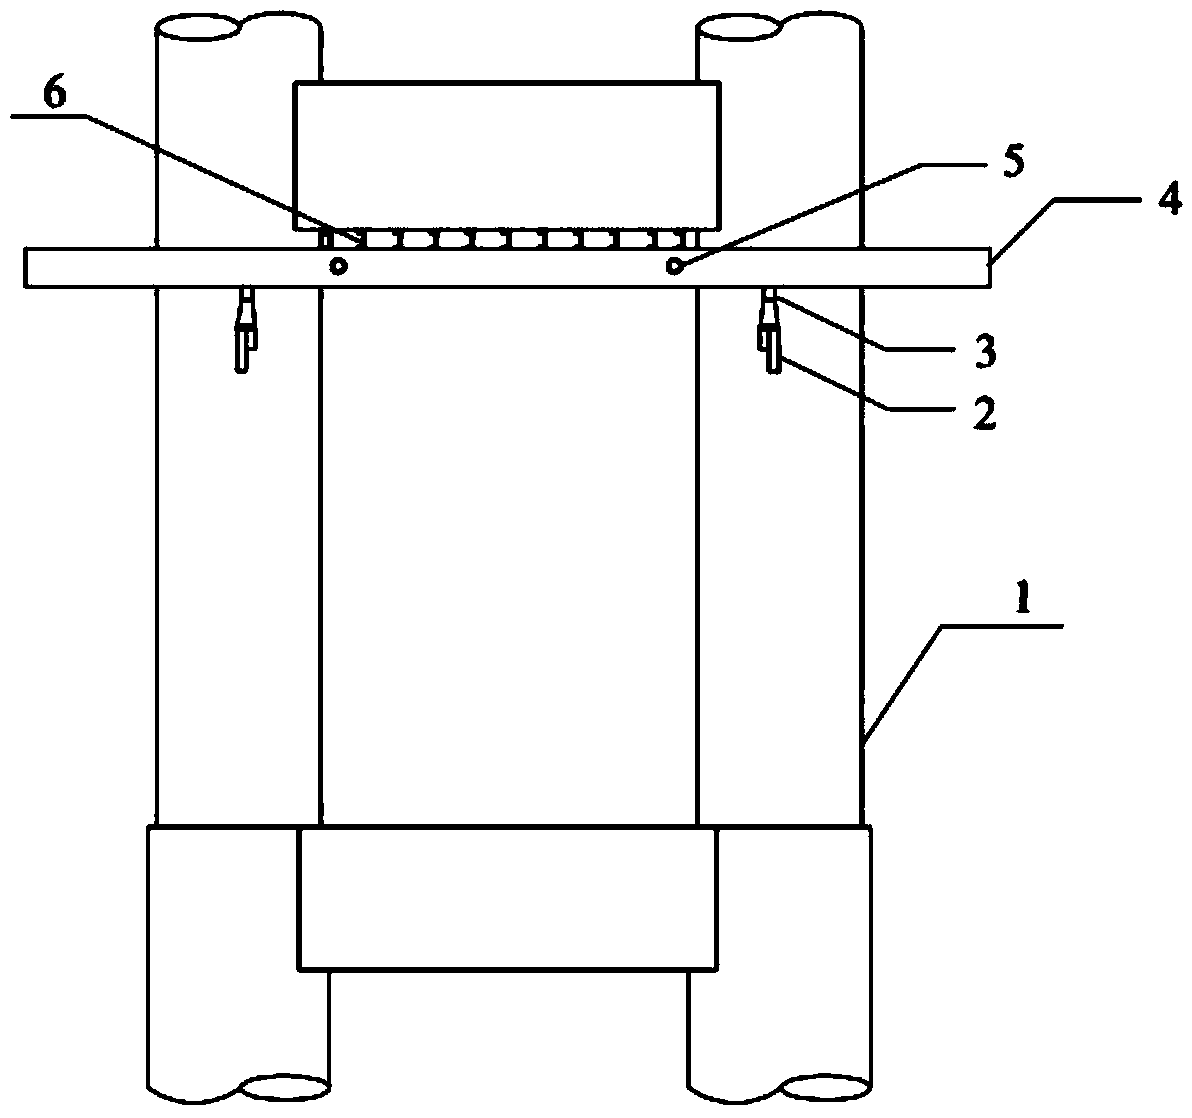 Pier and horizontal tie beam bracket support synchronization construction method